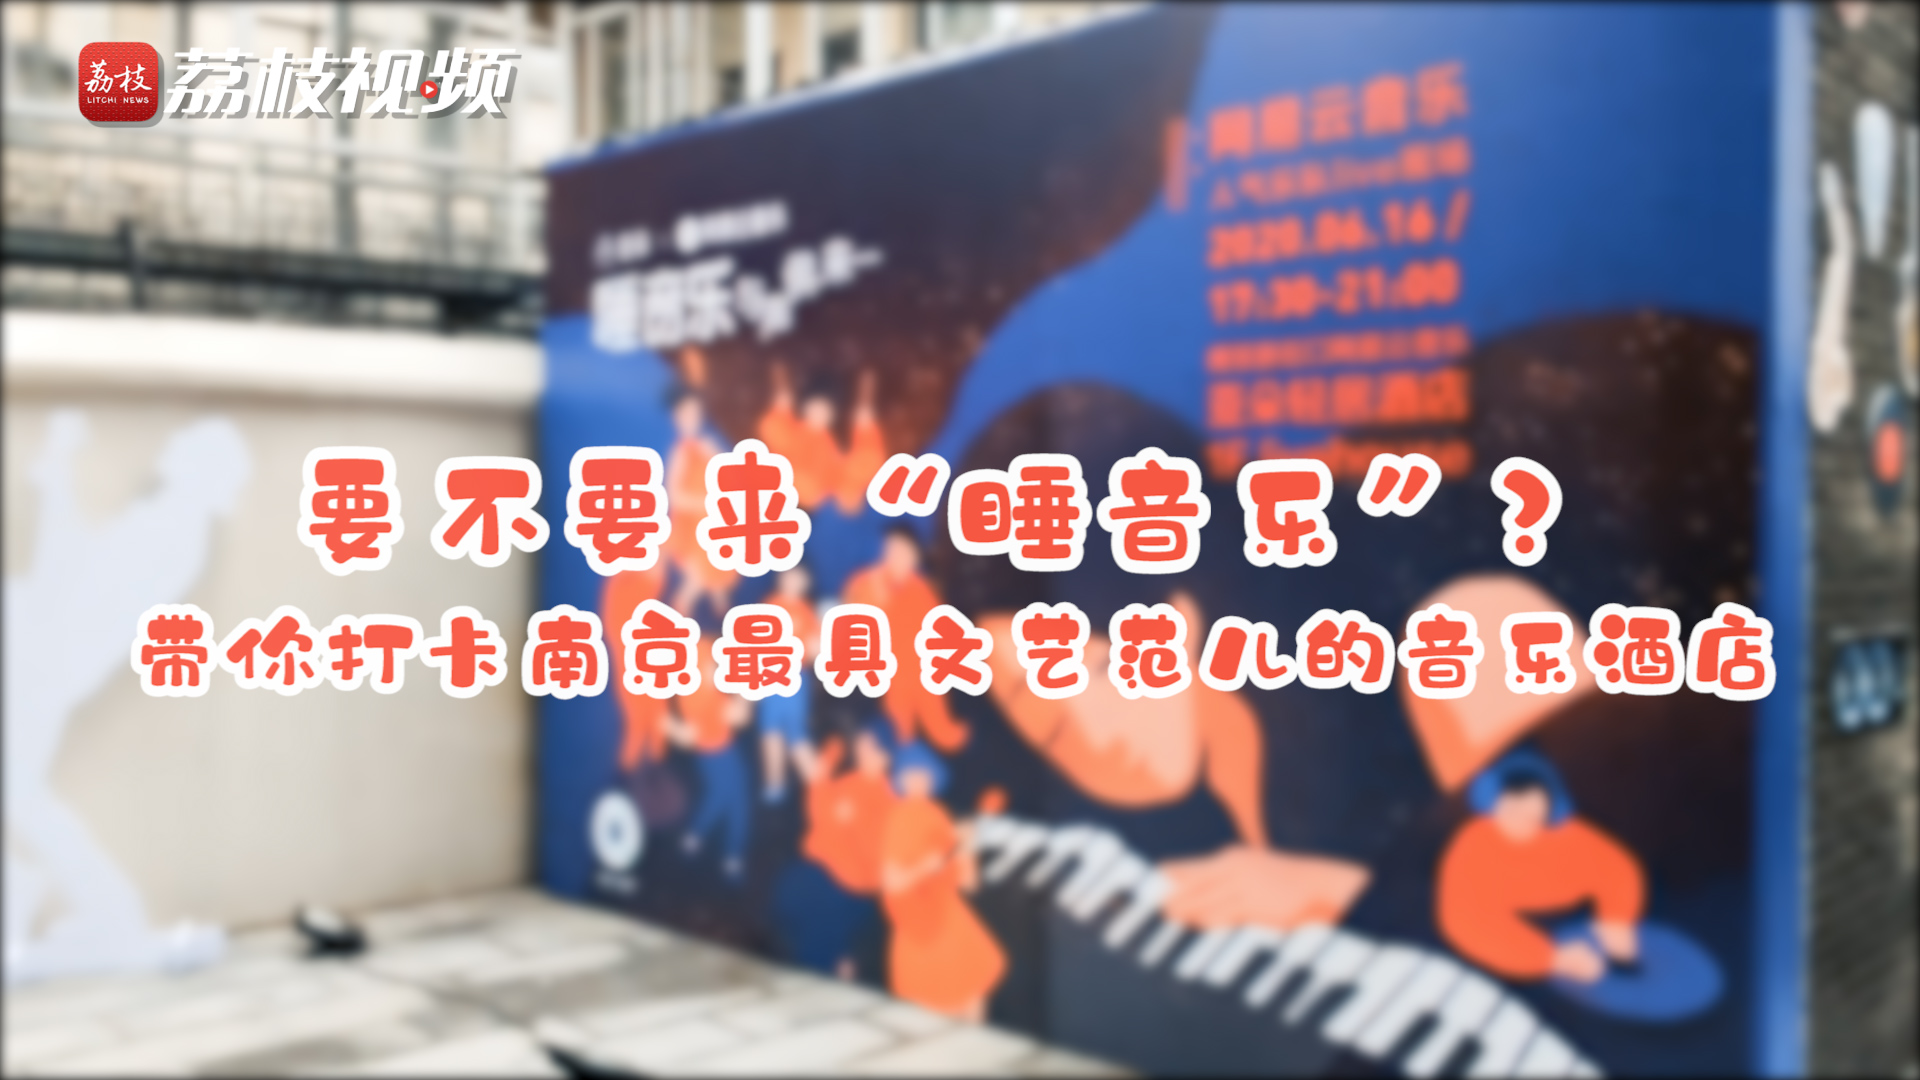 vlog|要不要来“睡音乐”？带你打卡南京最具文艺范儿的音乐酒店！